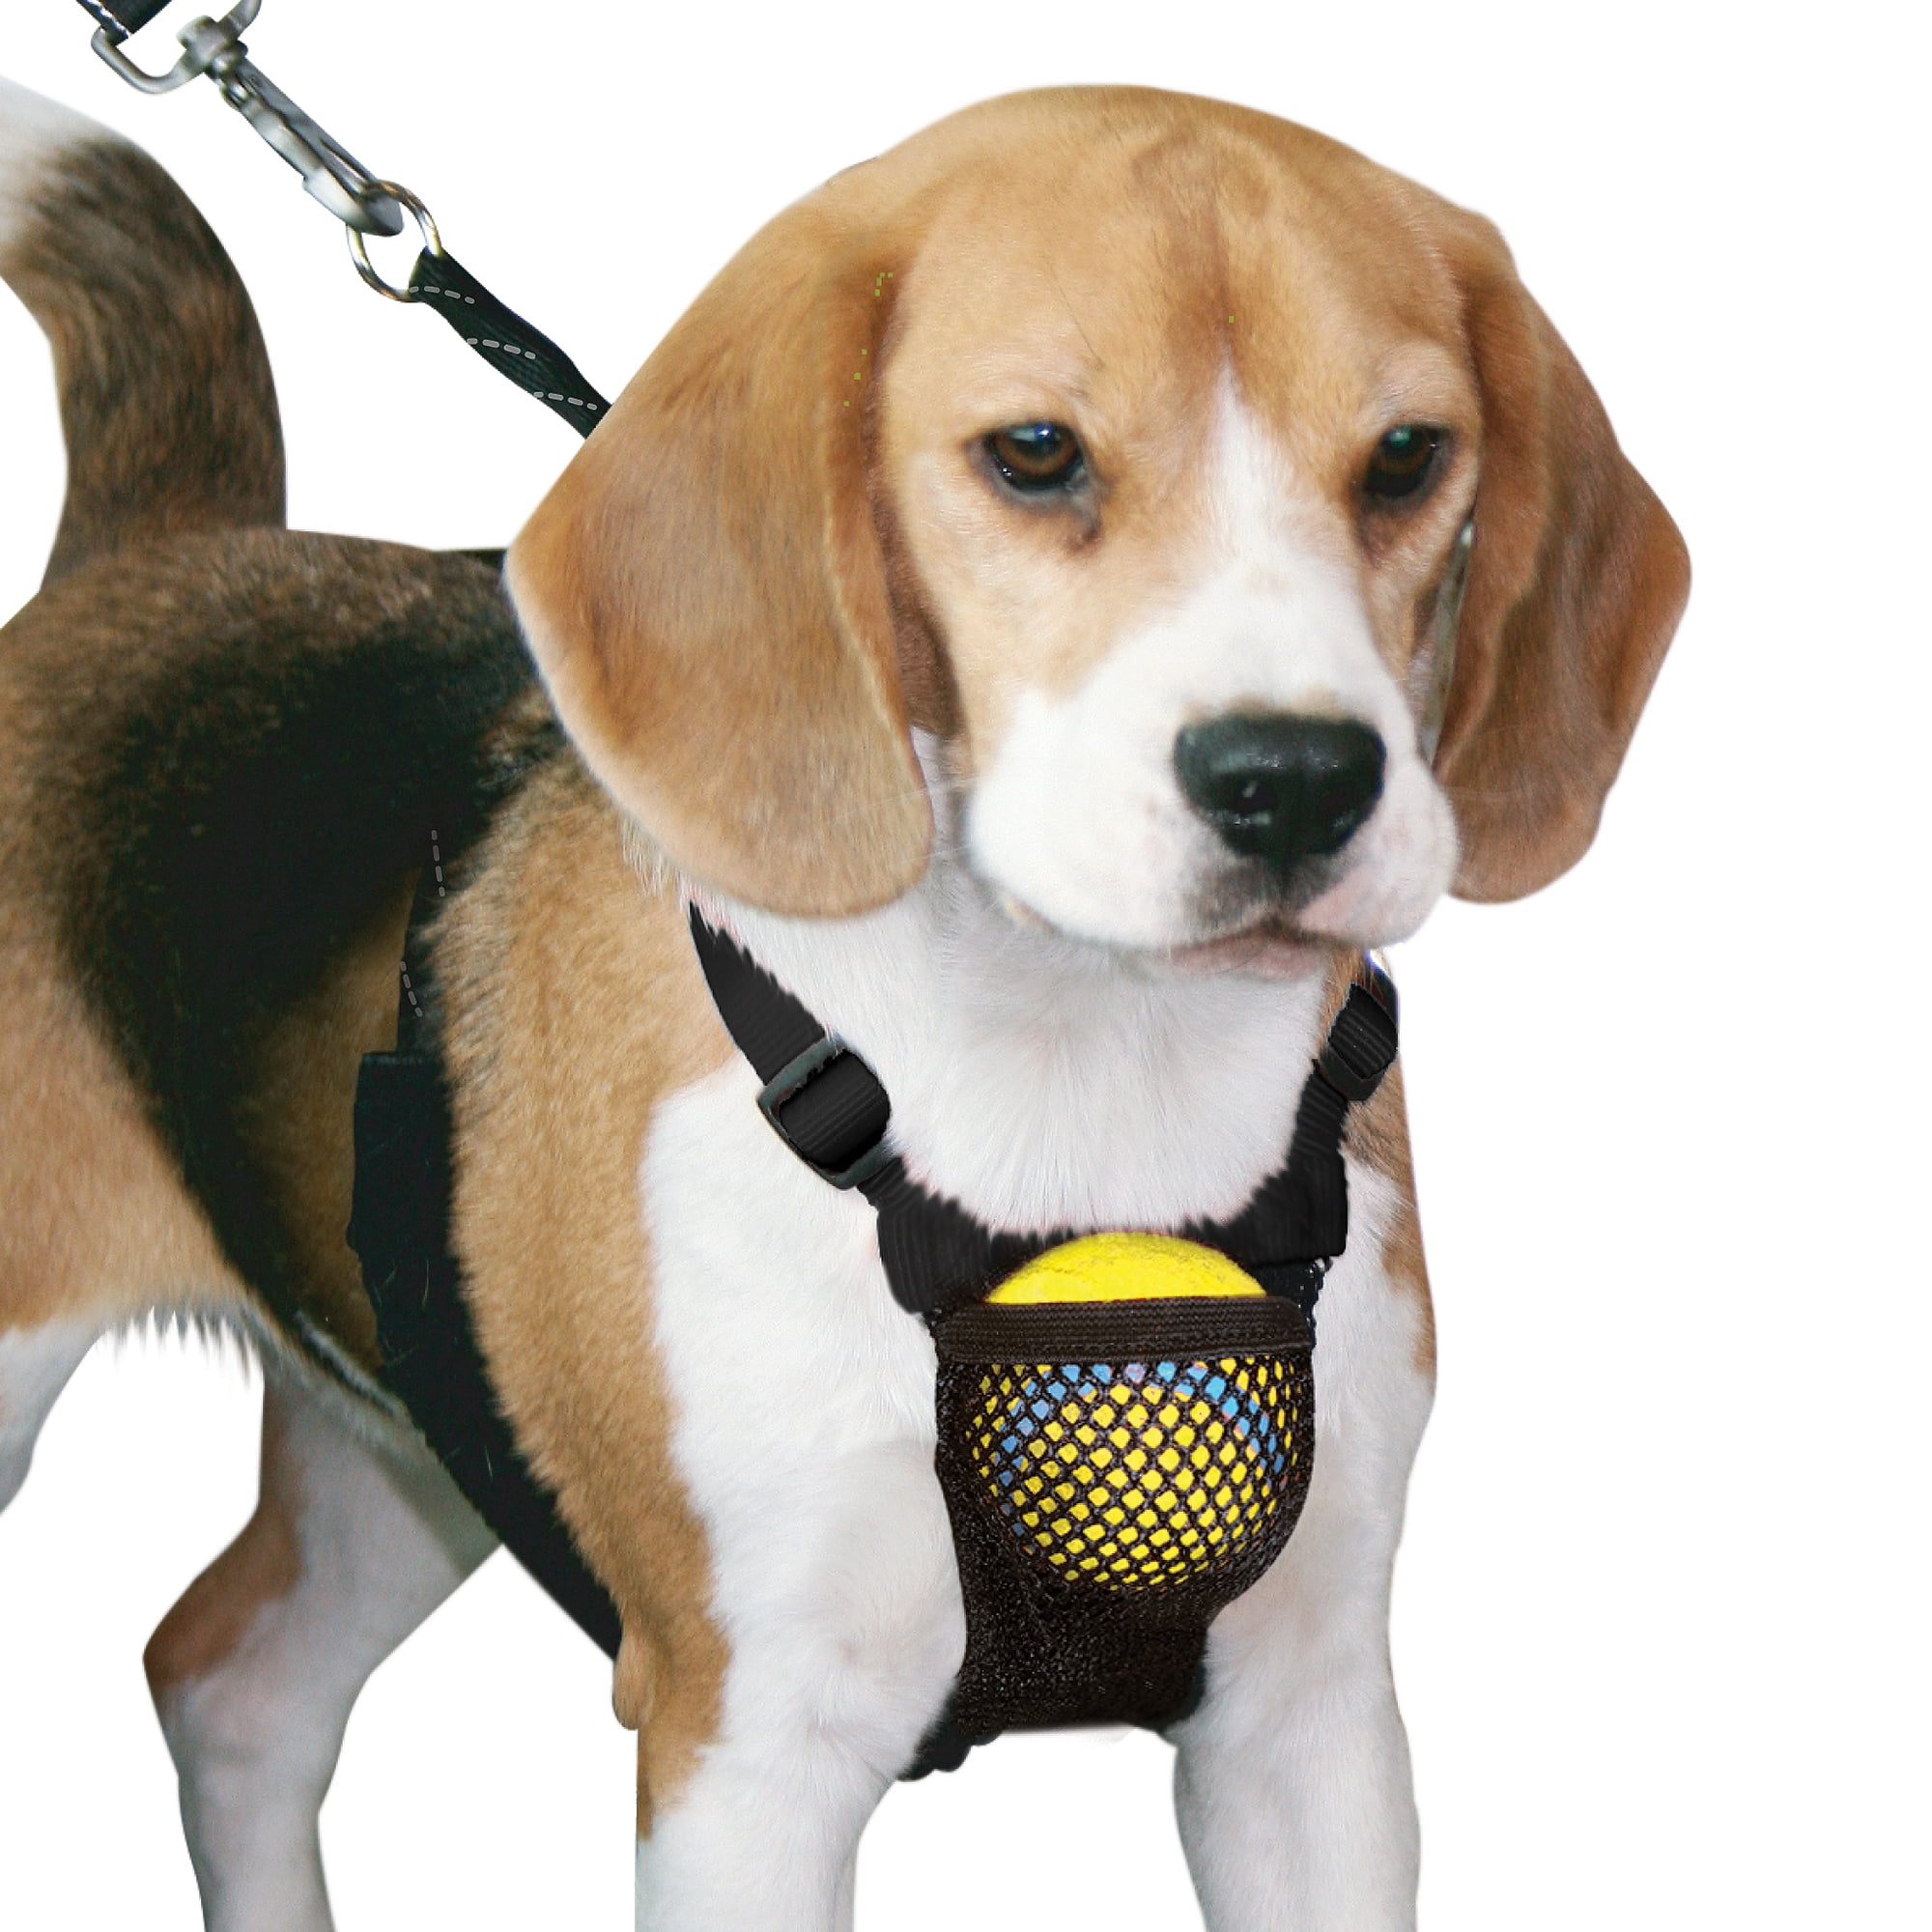 Sporn Nylon Mesh Non-Pulling Dog Harness, Black, M (14" to 20" Chest Size)